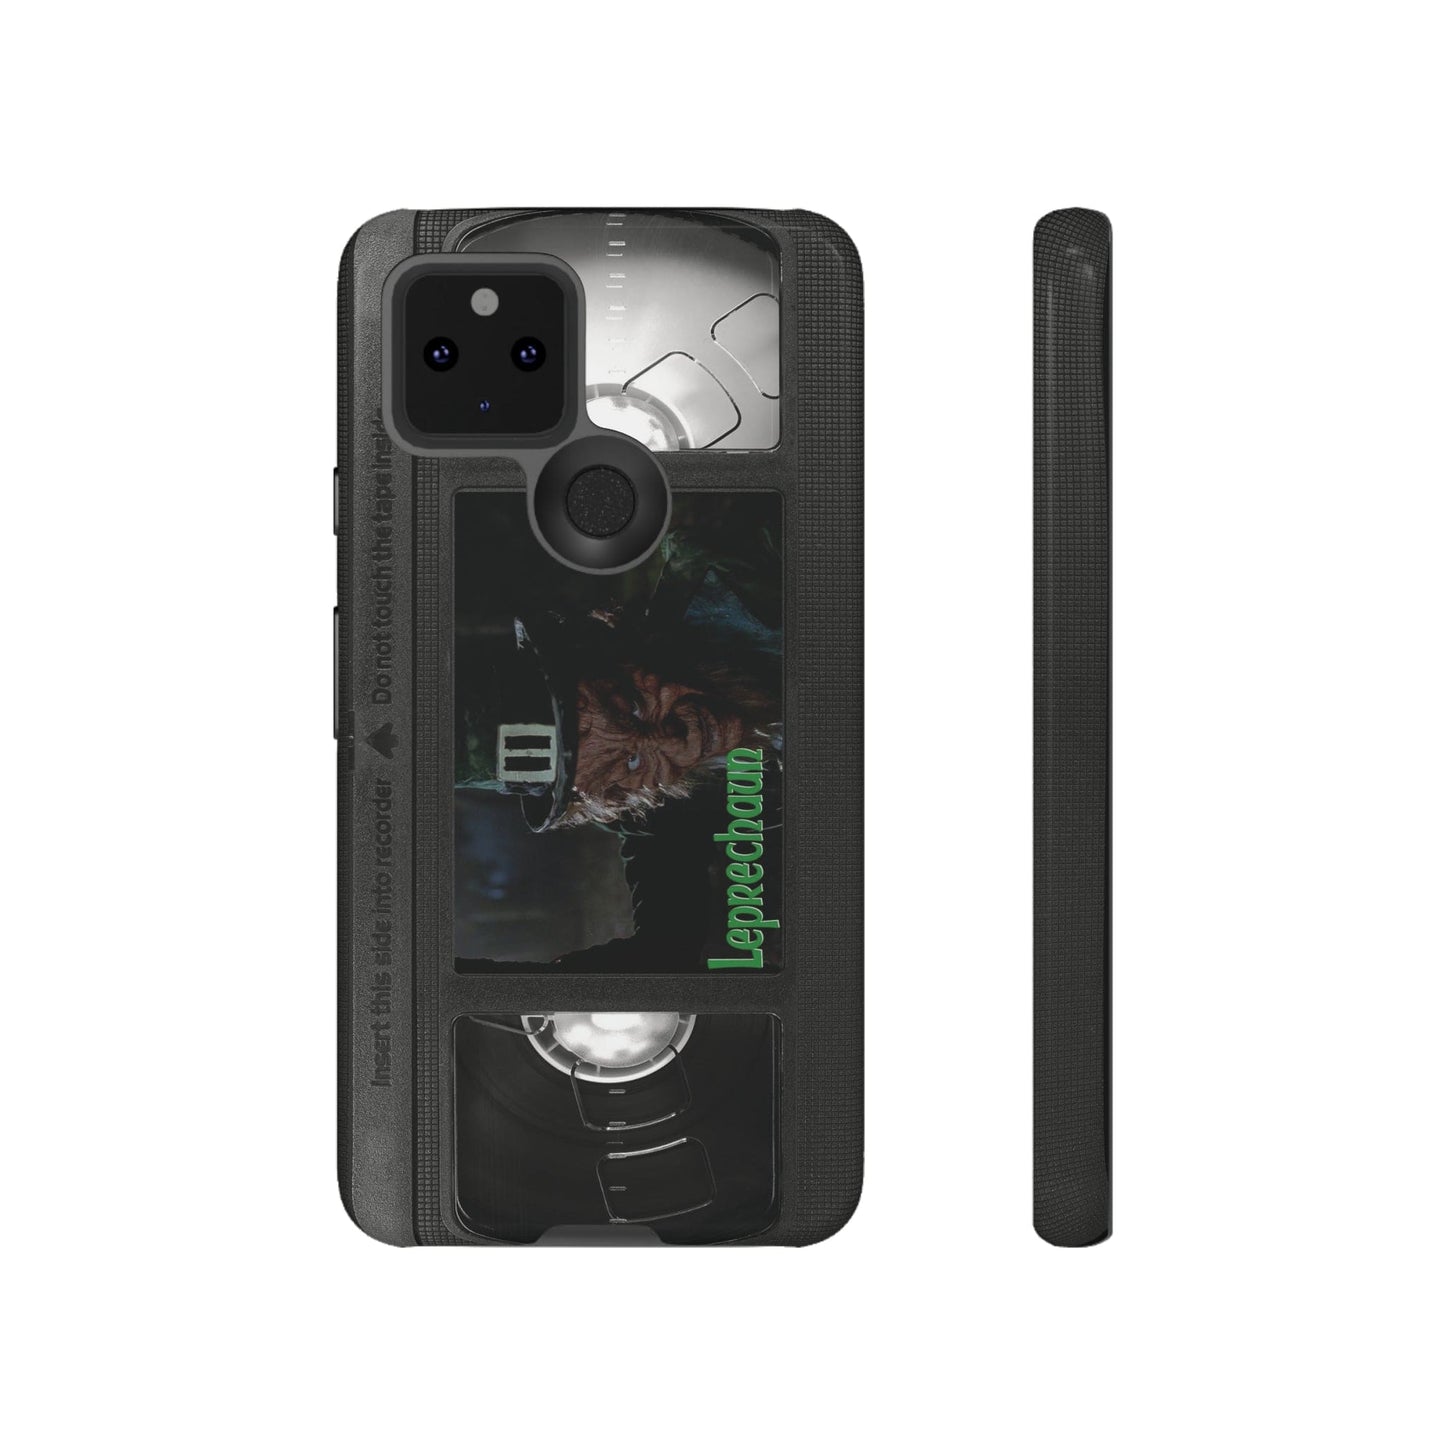 Lephrechaun Impact Resistant VHS Phone Case